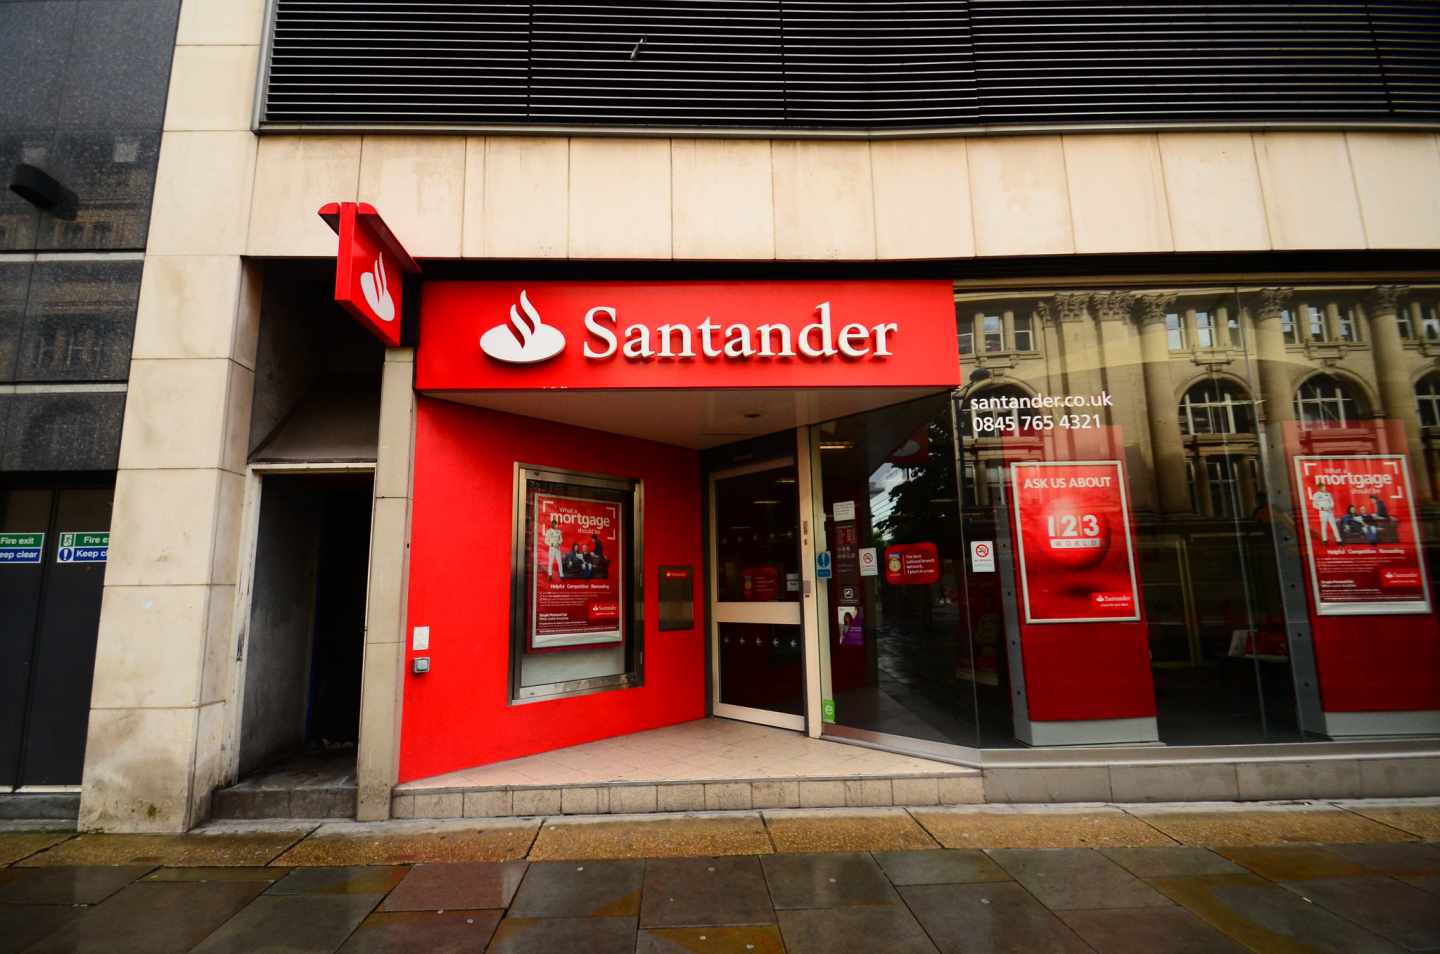 Oficina de Santander en Manchester